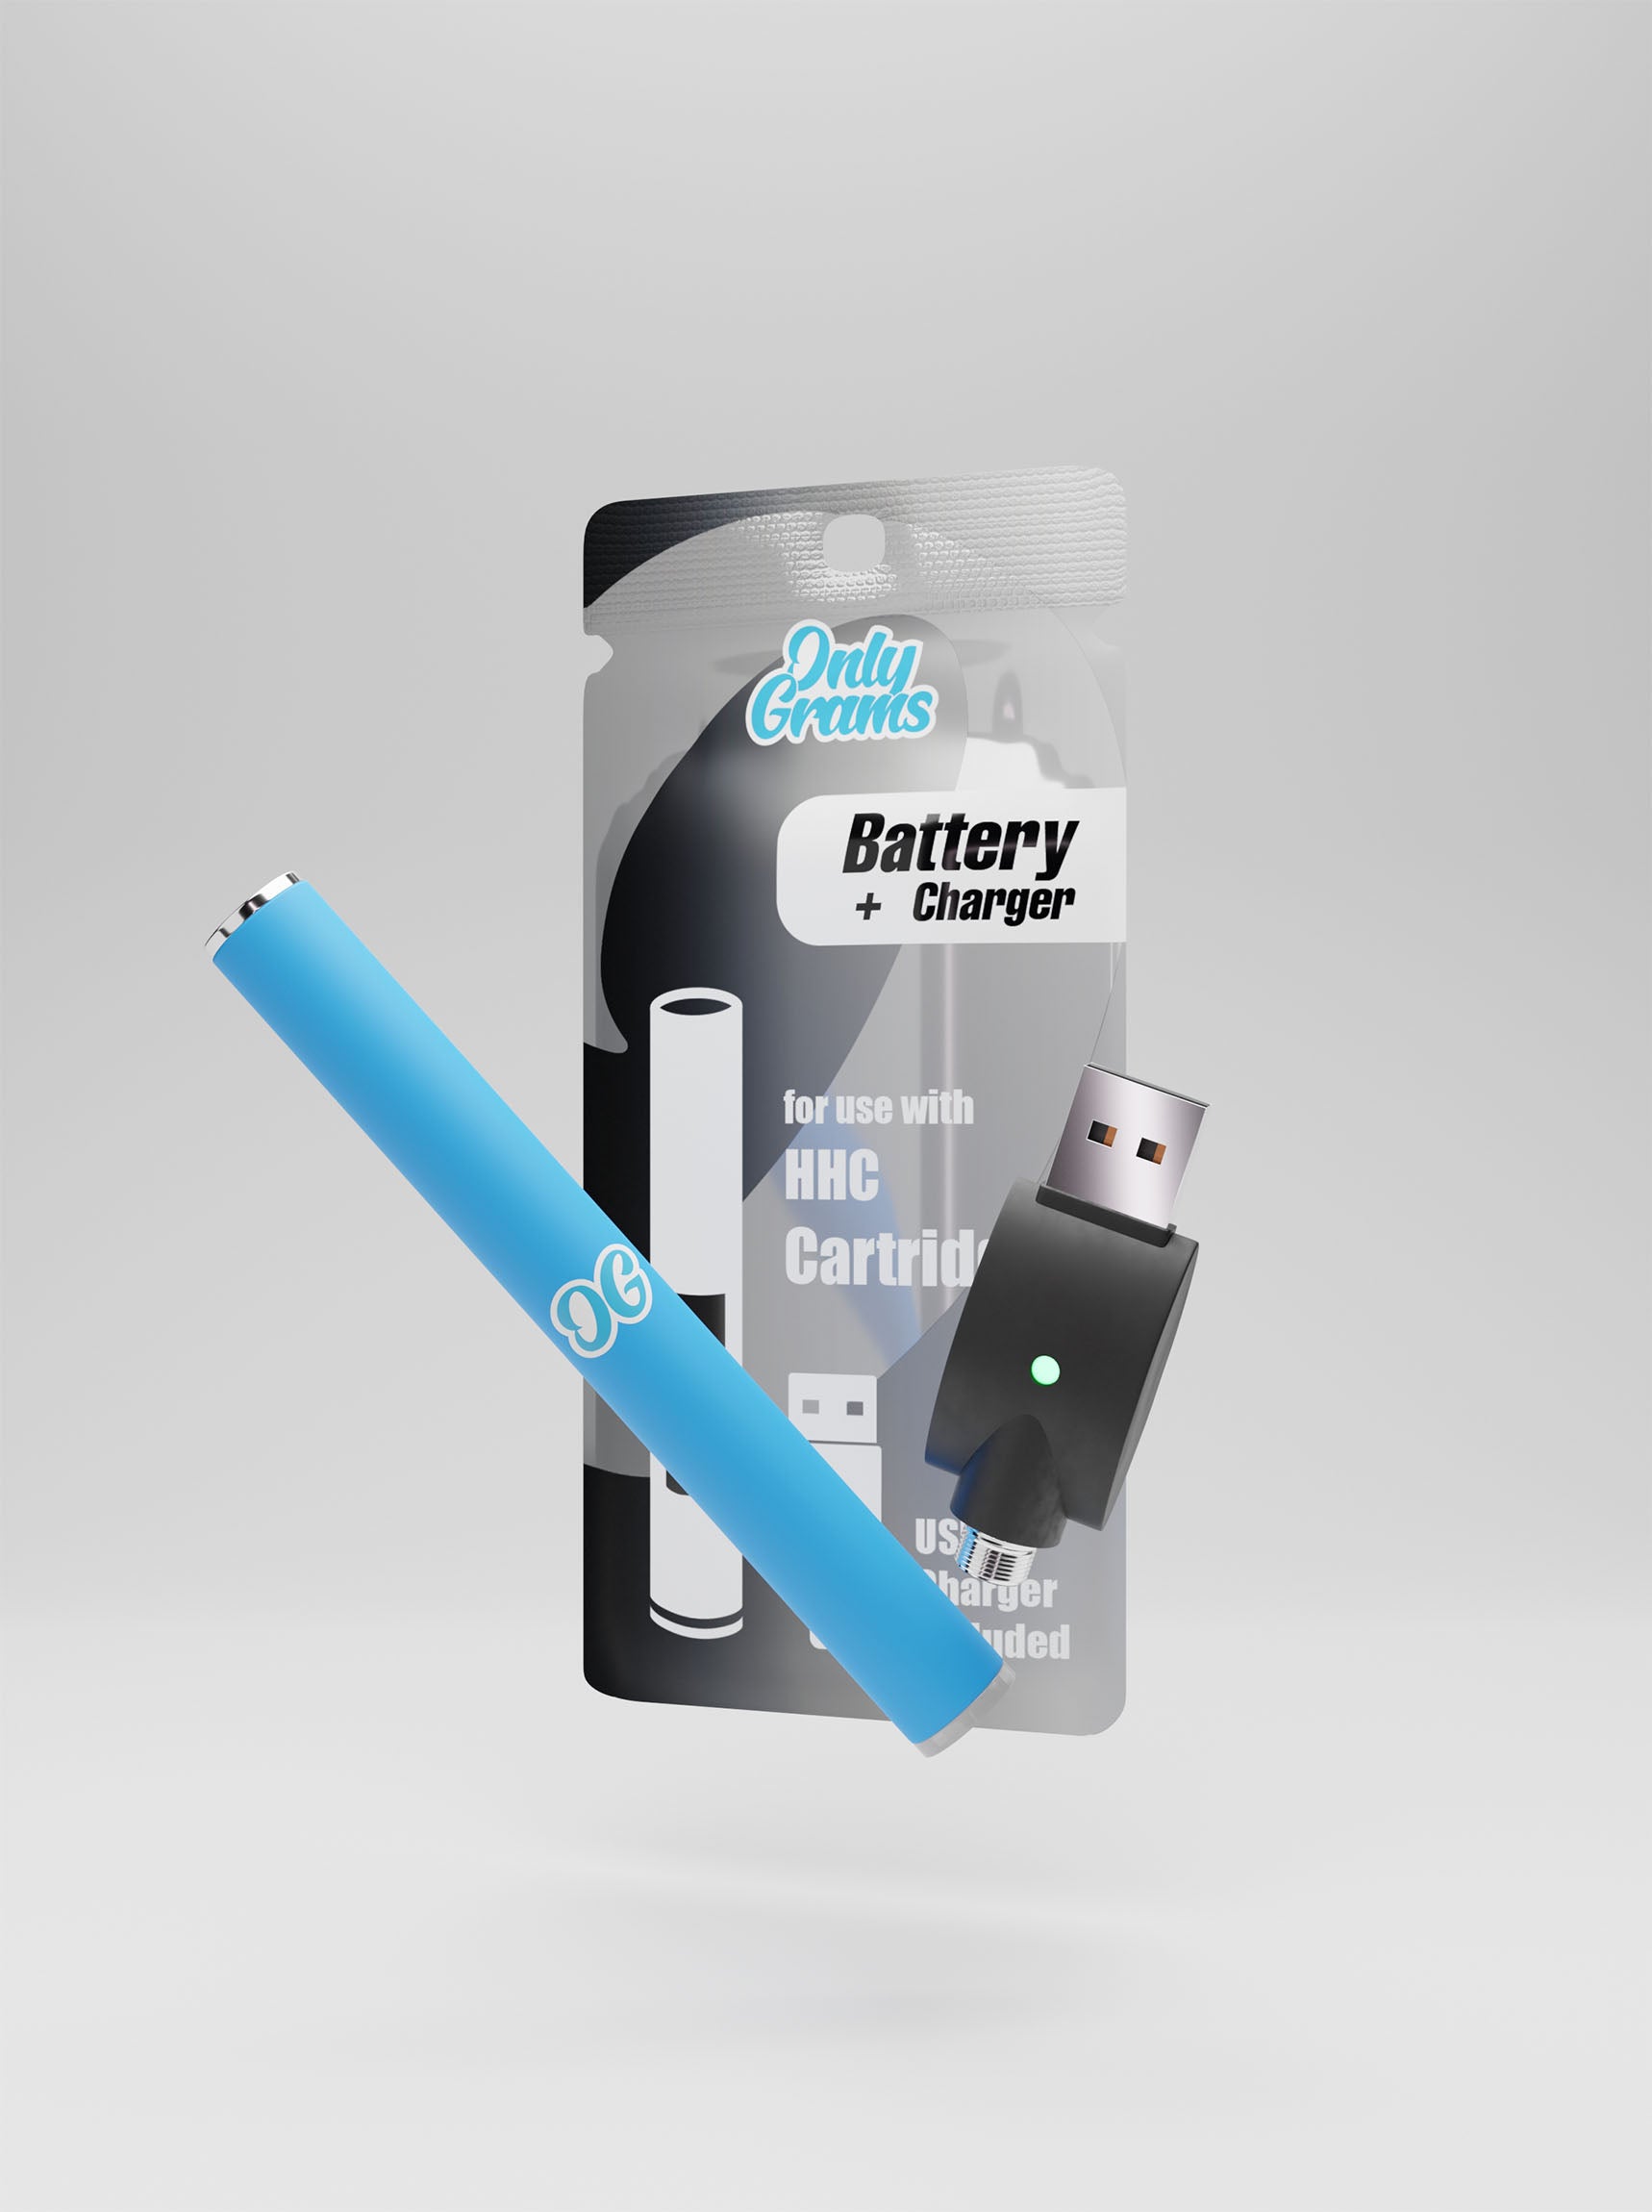 HHC cartridge battery carrier + charging adapter